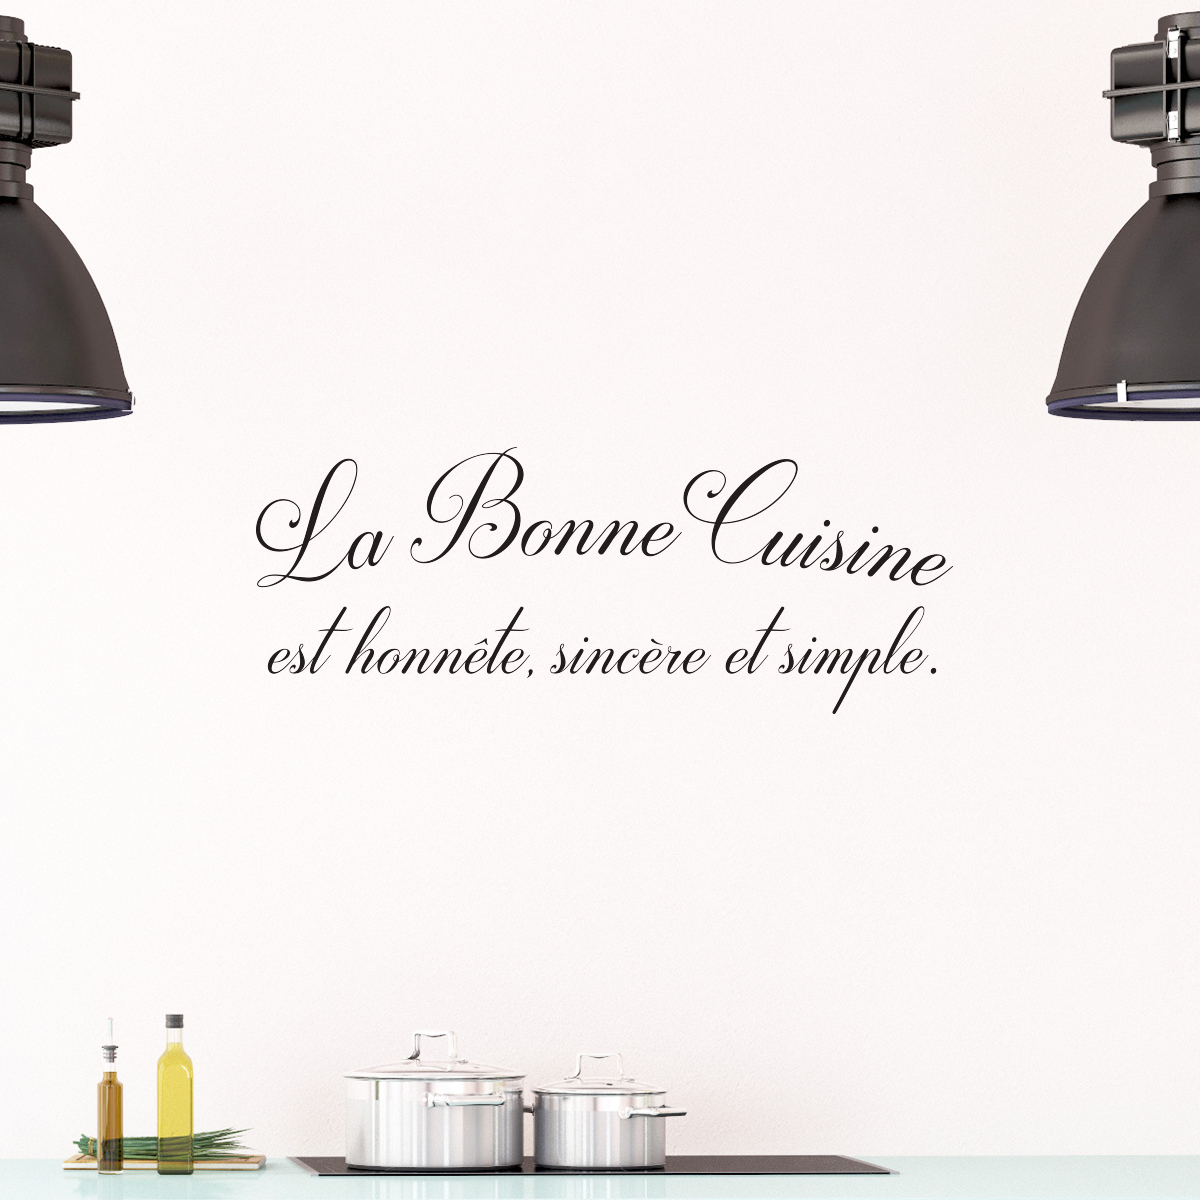 Wall sticker quote kitchen La Bonne Cuisine